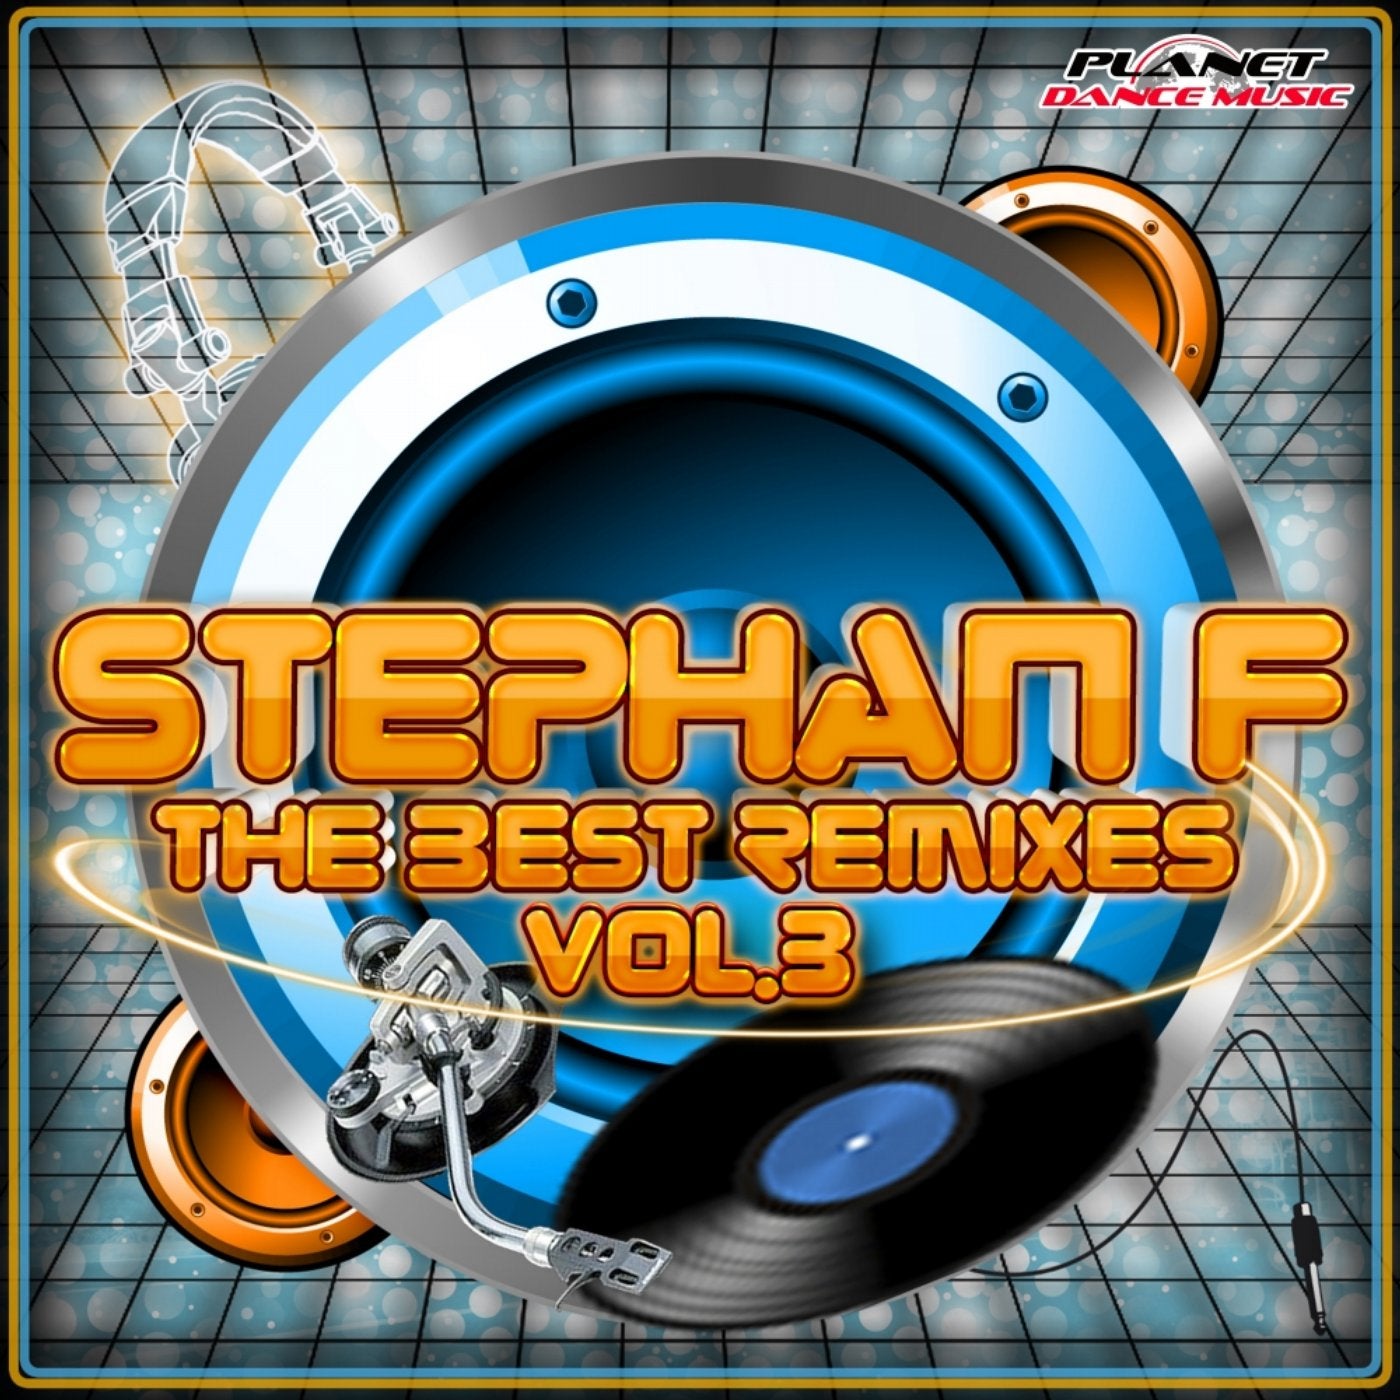 Stephan F: The Best Remixes, Vol. 3